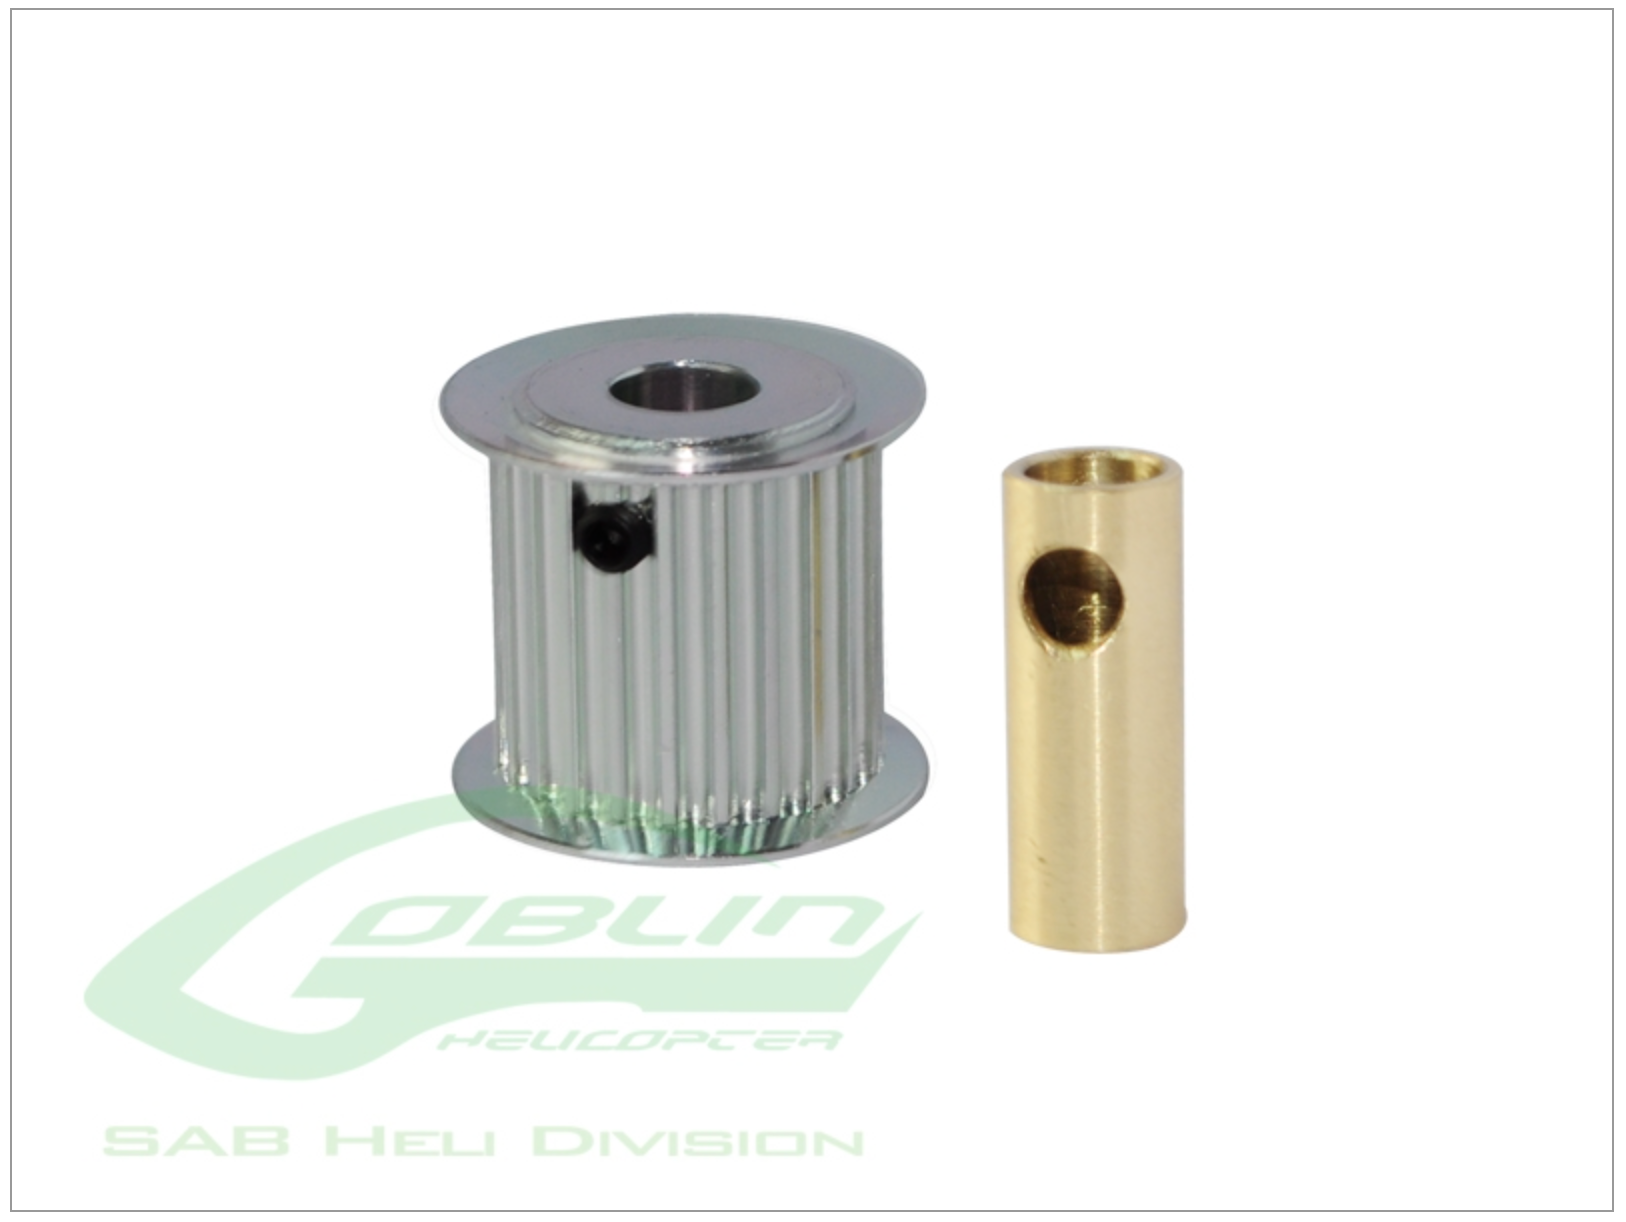 H0175-23-S Aluminum Motor Pulley 23T (for 6/8mm motor shaft)